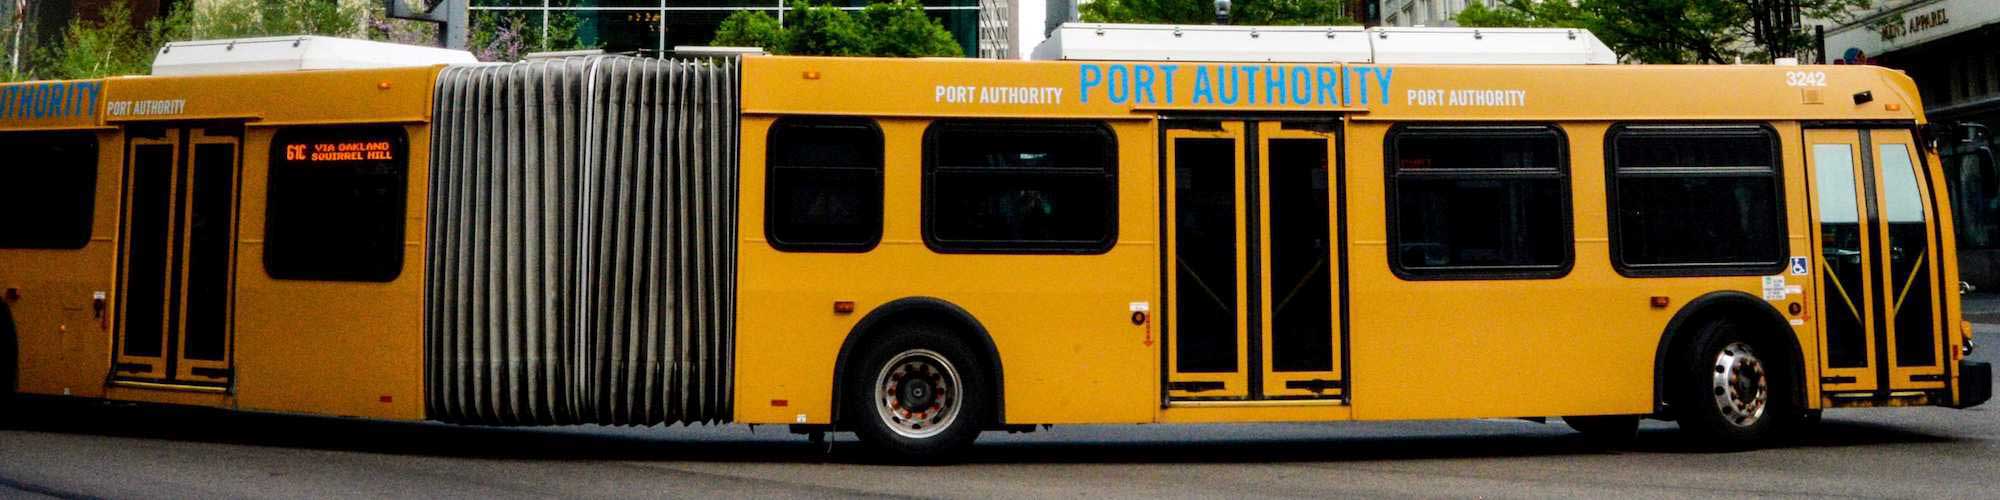 Port Authority Board